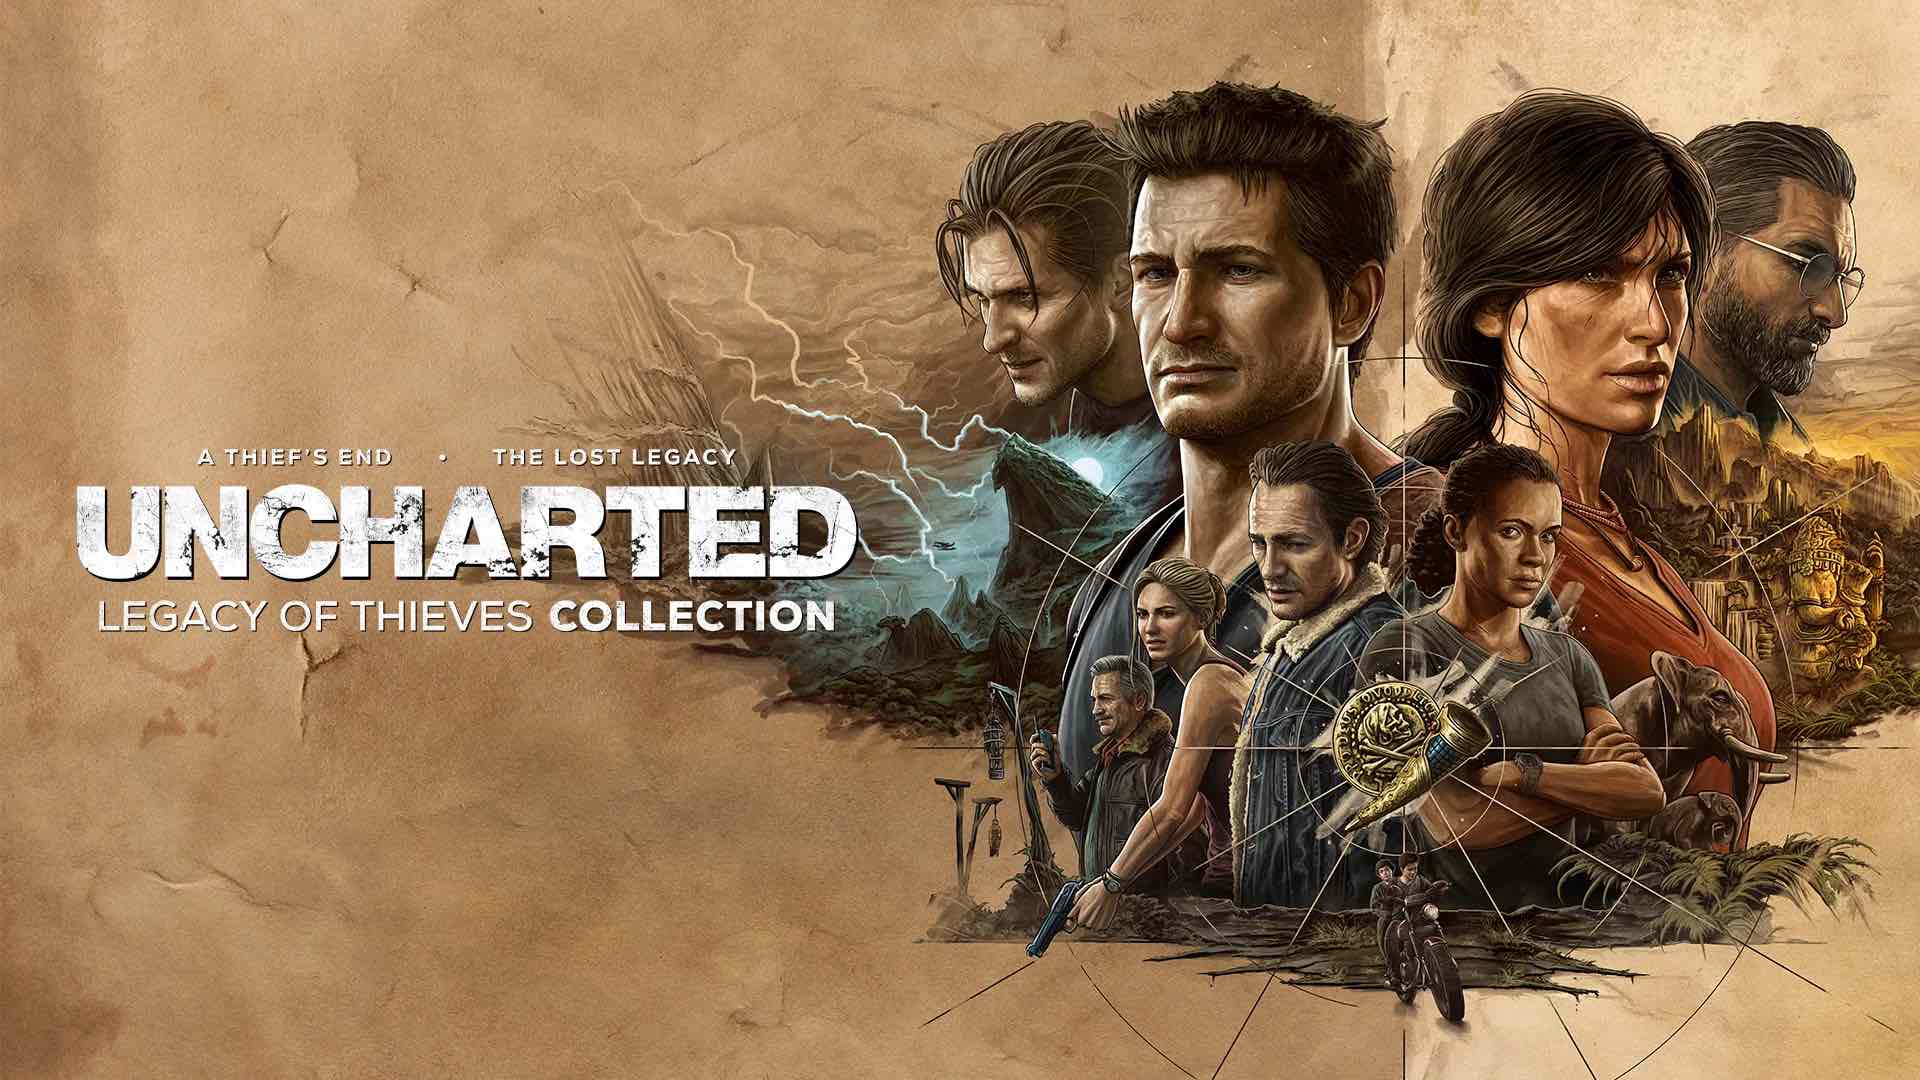 ریمستر بازی Uncharted 4: A Thief’s End و Uncharted: The Lost Legacy معرفی شد